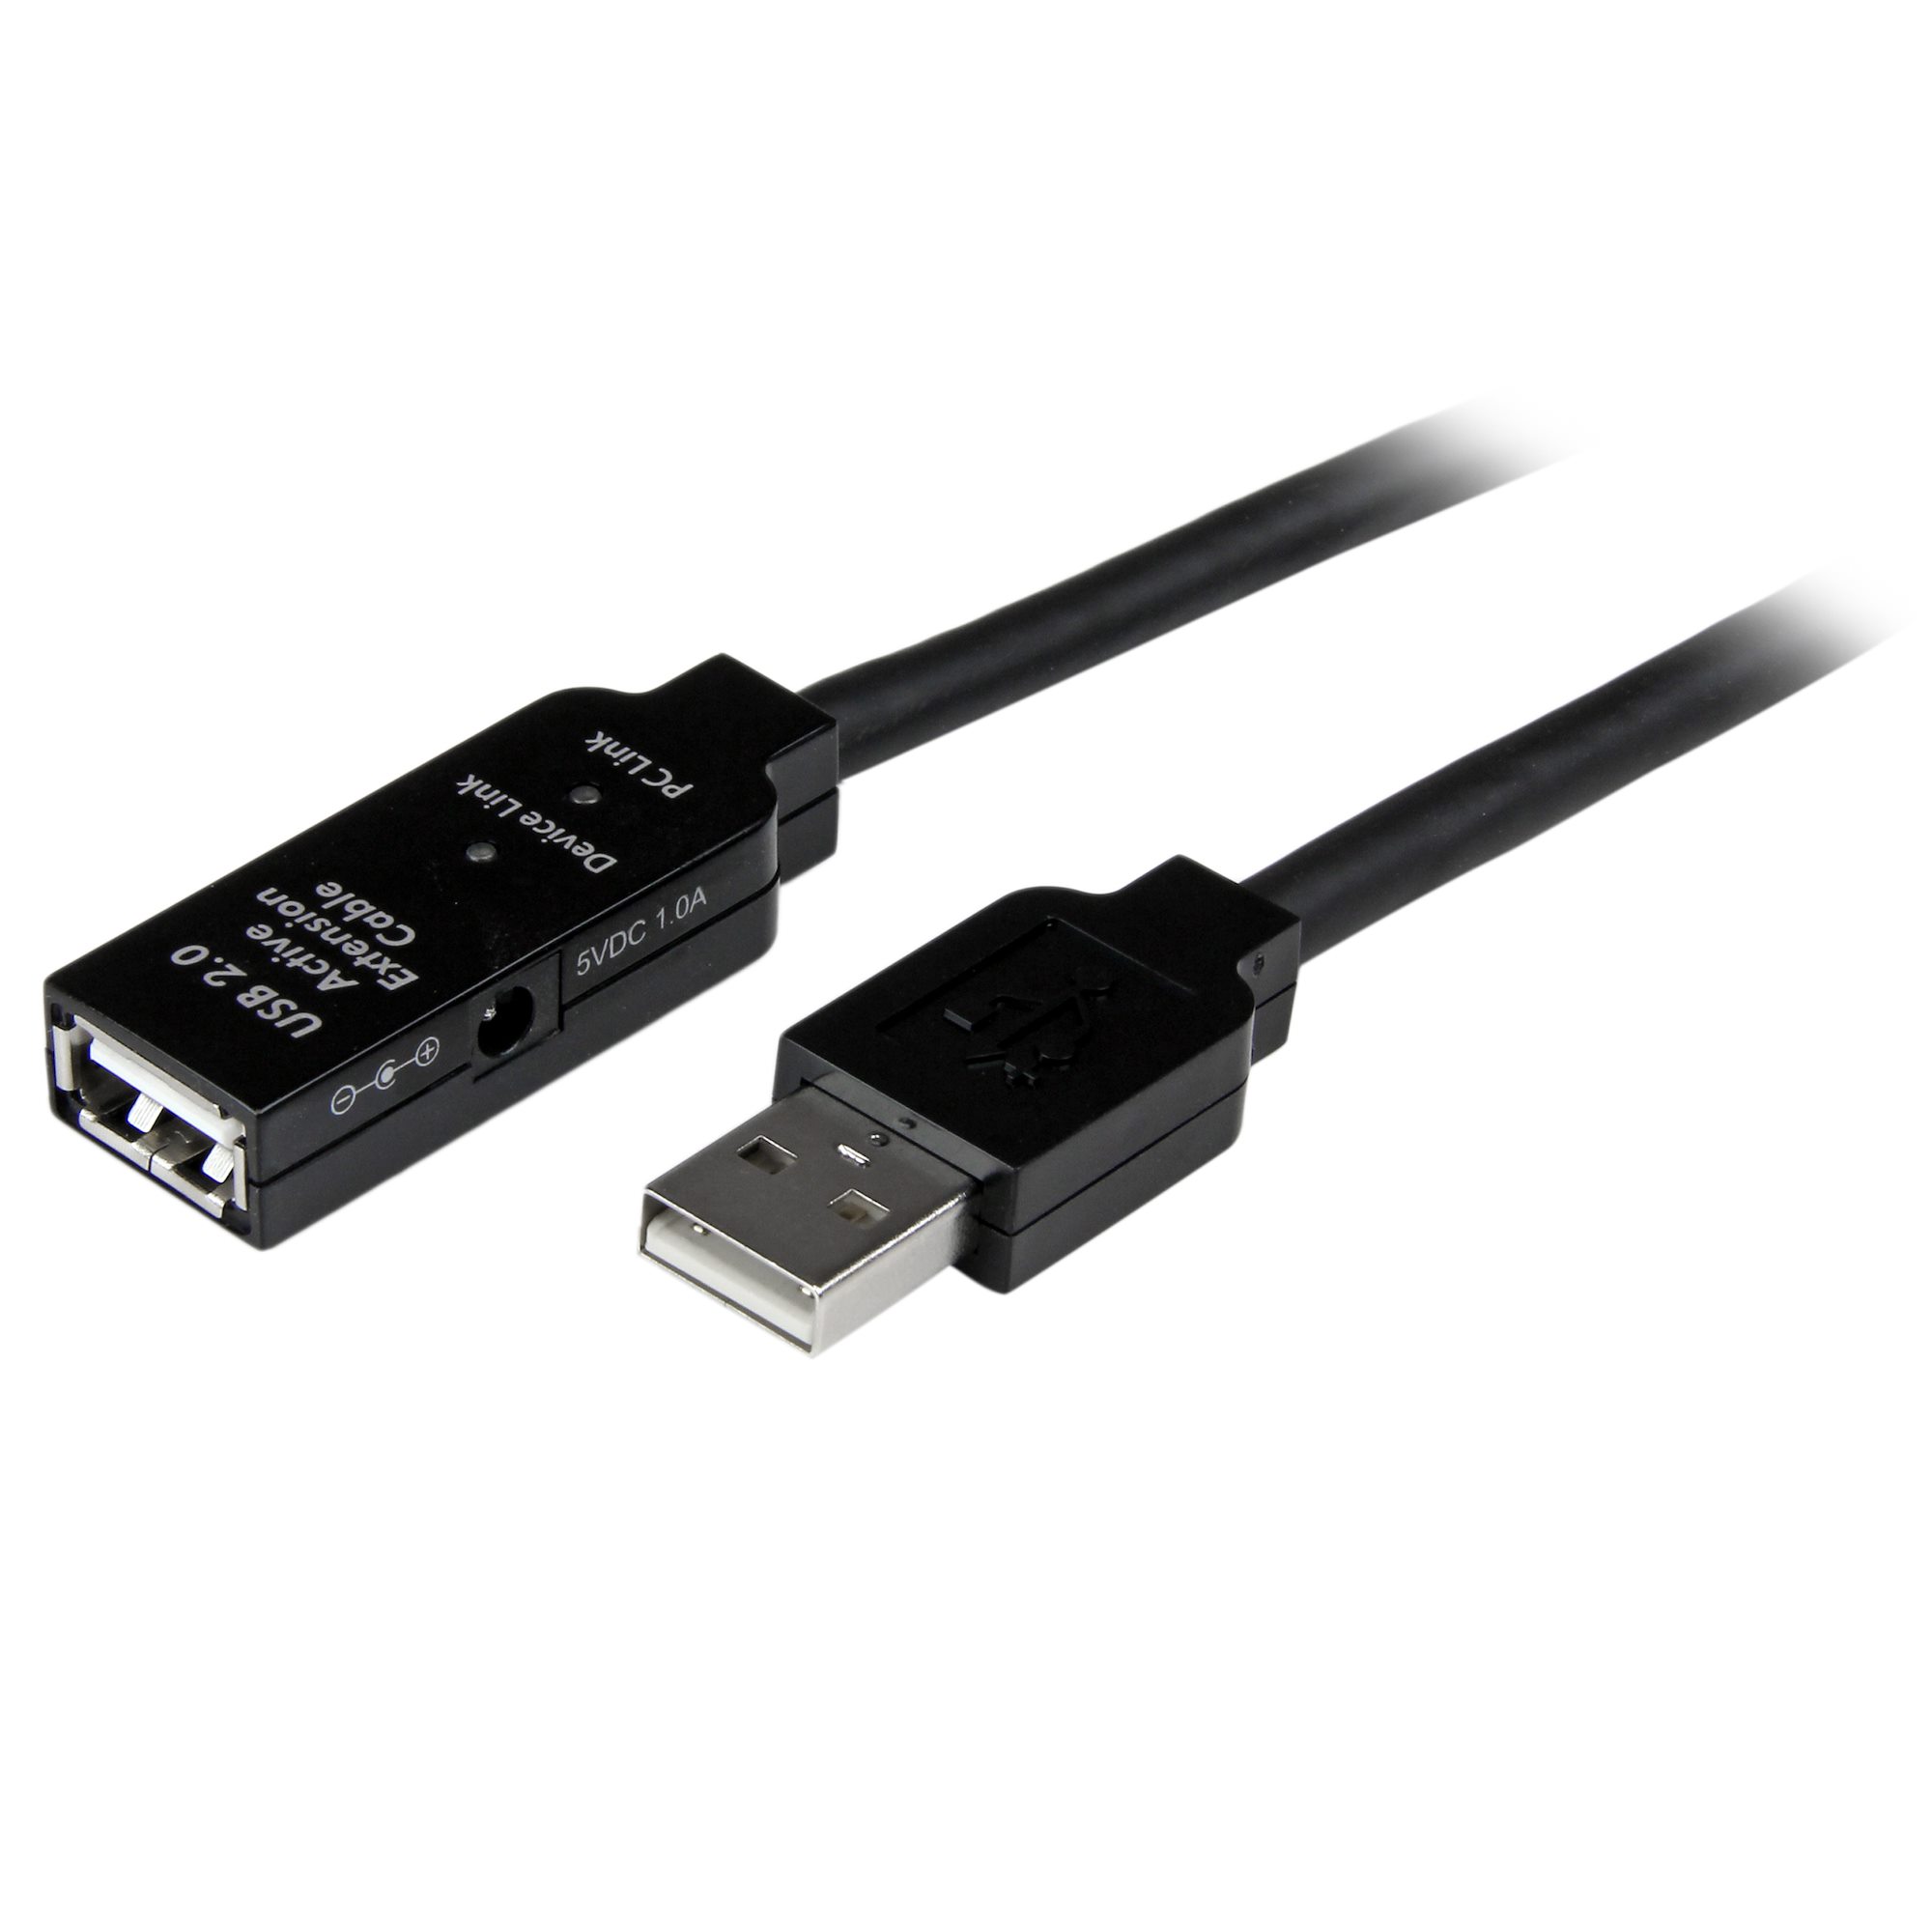 deleyCON 1,5m Extensión USB 2.0 Cable de Alta Velocidad Cable Alargador Extensor Cable de Datos USB A Macho a USB A Hembra Negro 